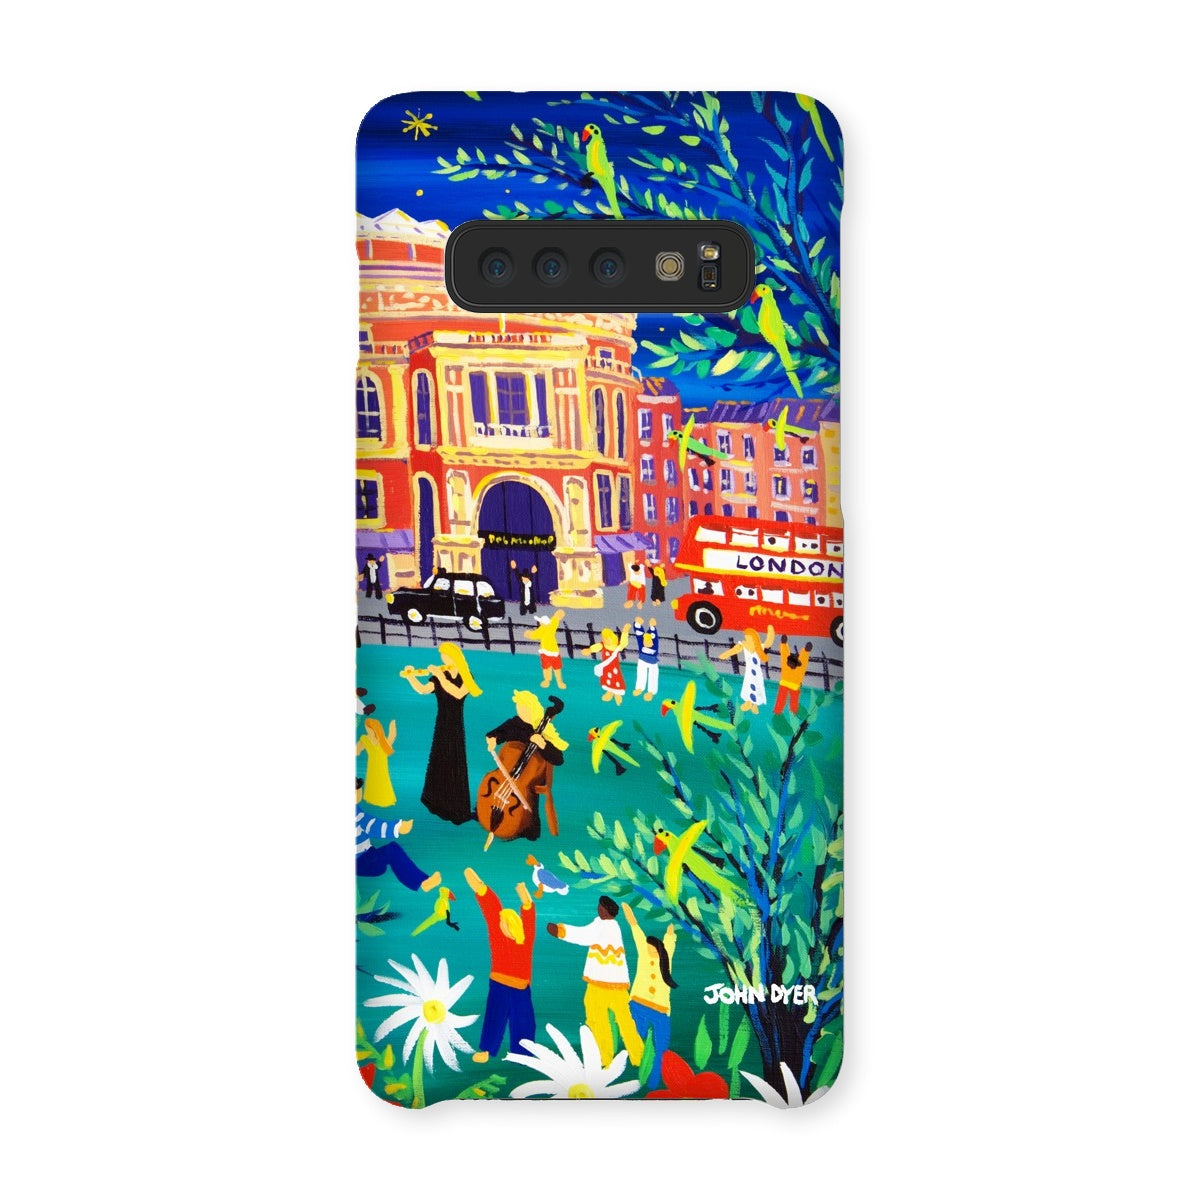 Snap Art Phone Case. Royal Albert Hall, Hyde park, London. Musicians. Artist John Dyer. Cornwall Art Gallery